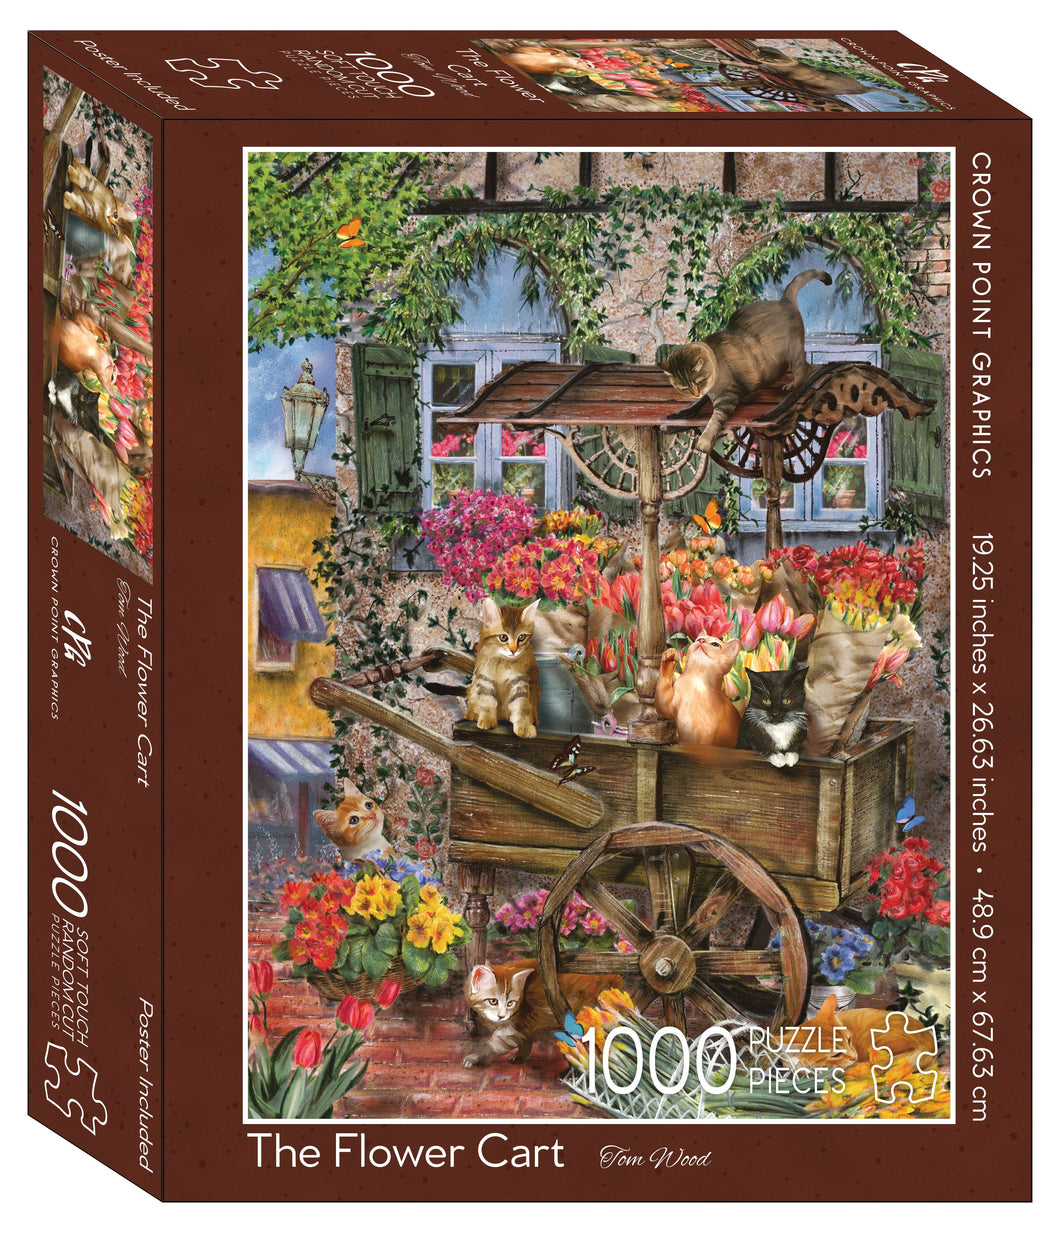 92246 - The Flower Cart - 1000 Piece Puzzle